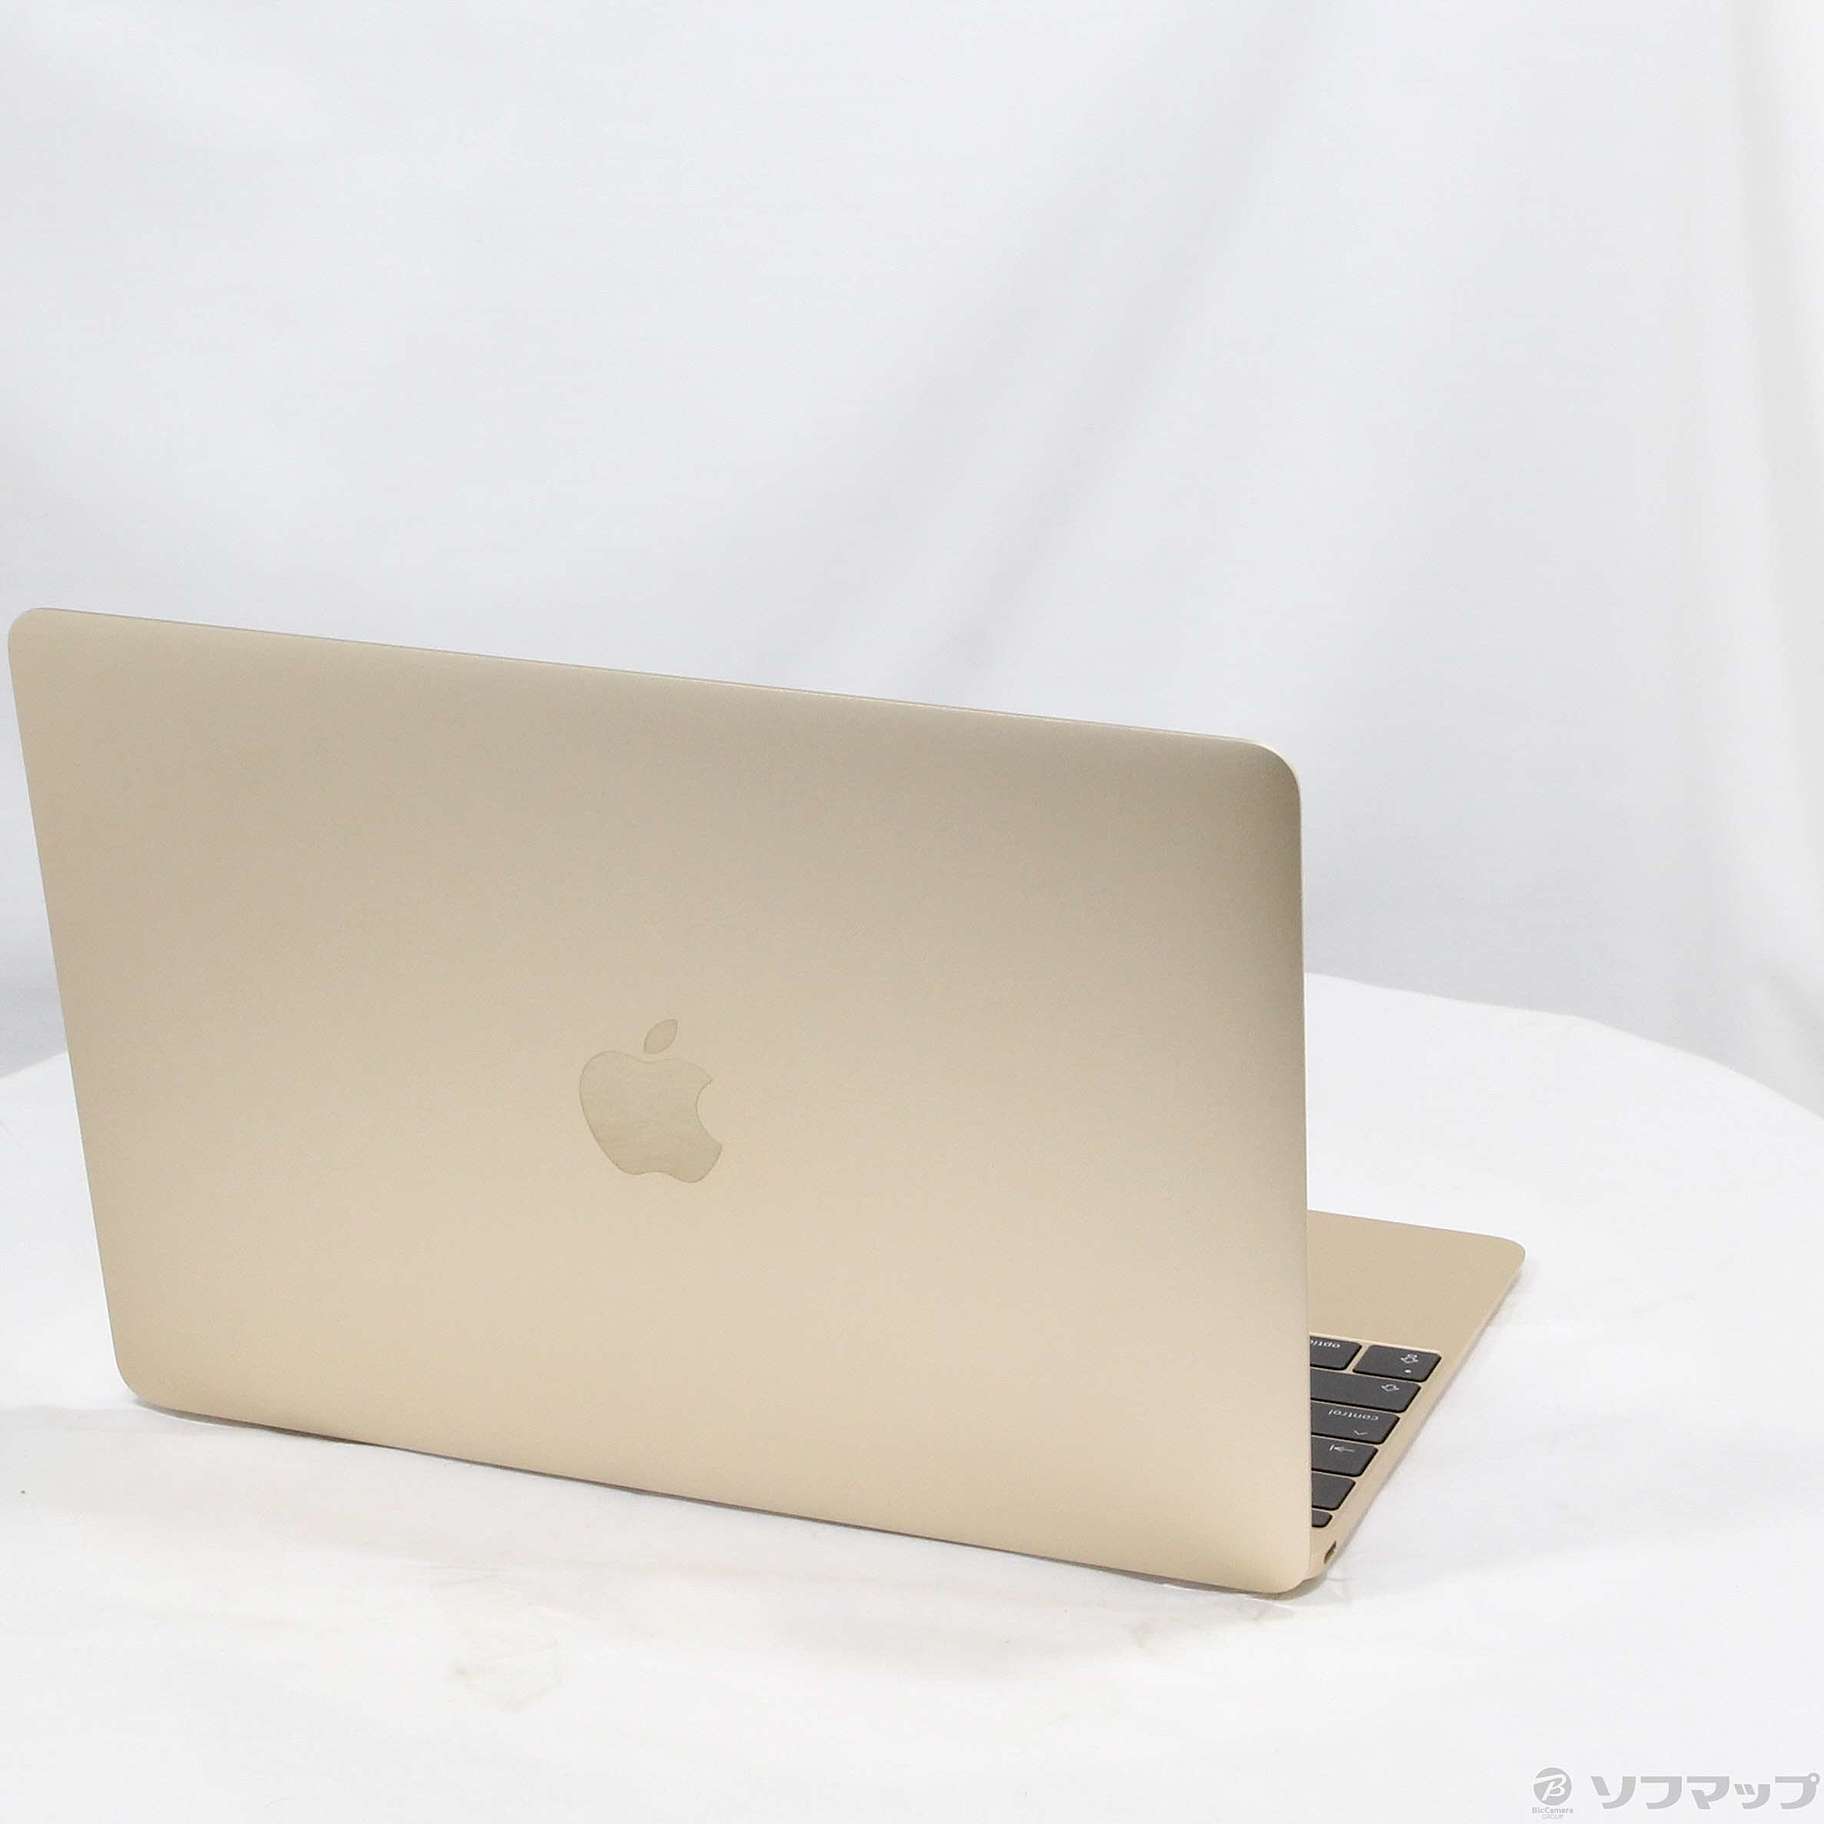 APPLE MacBook MACBOOK MNYK2J/A【箱付】 - www.bernadettewirth.com